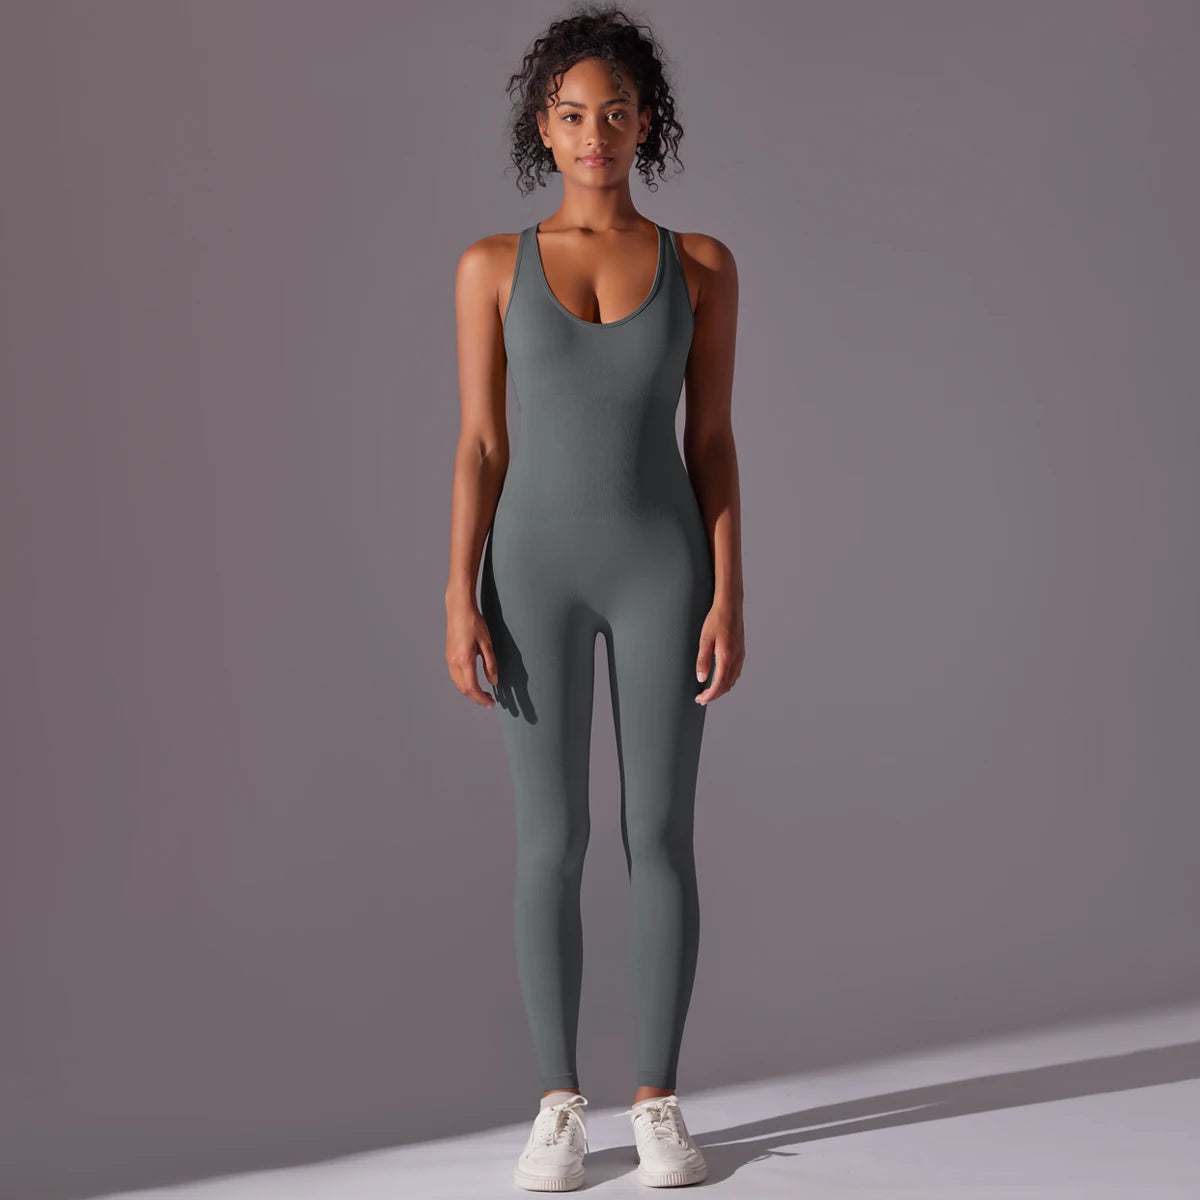 Grey Thrivefit Bodysuit 1.0